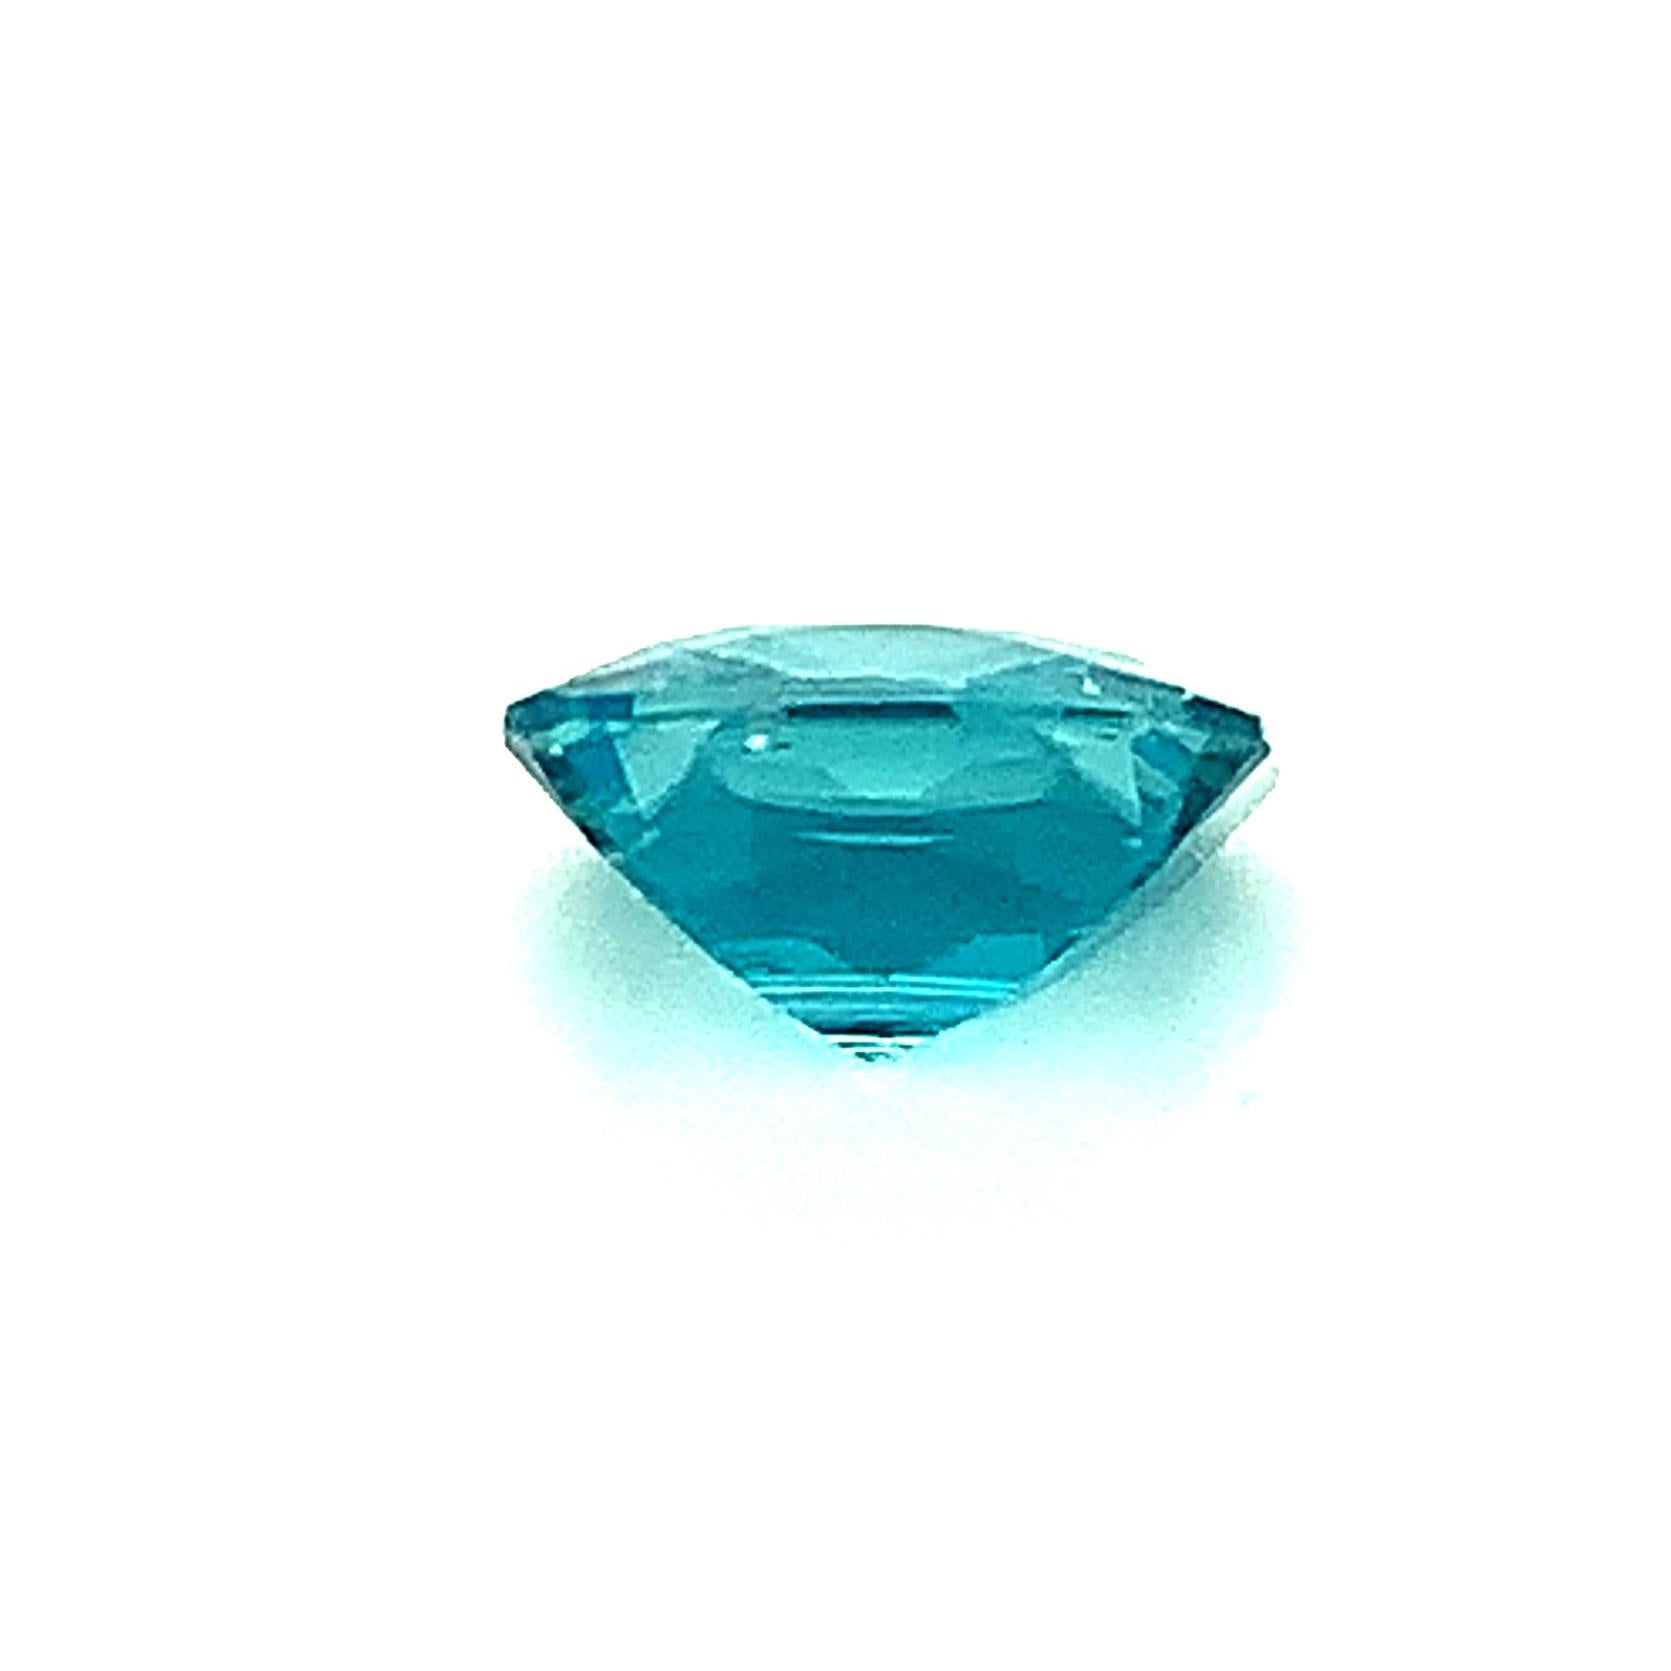 Square Cut 5.47 Carat Blue Zircon Square Octagon, Unset Loose Gemstone  For Sale